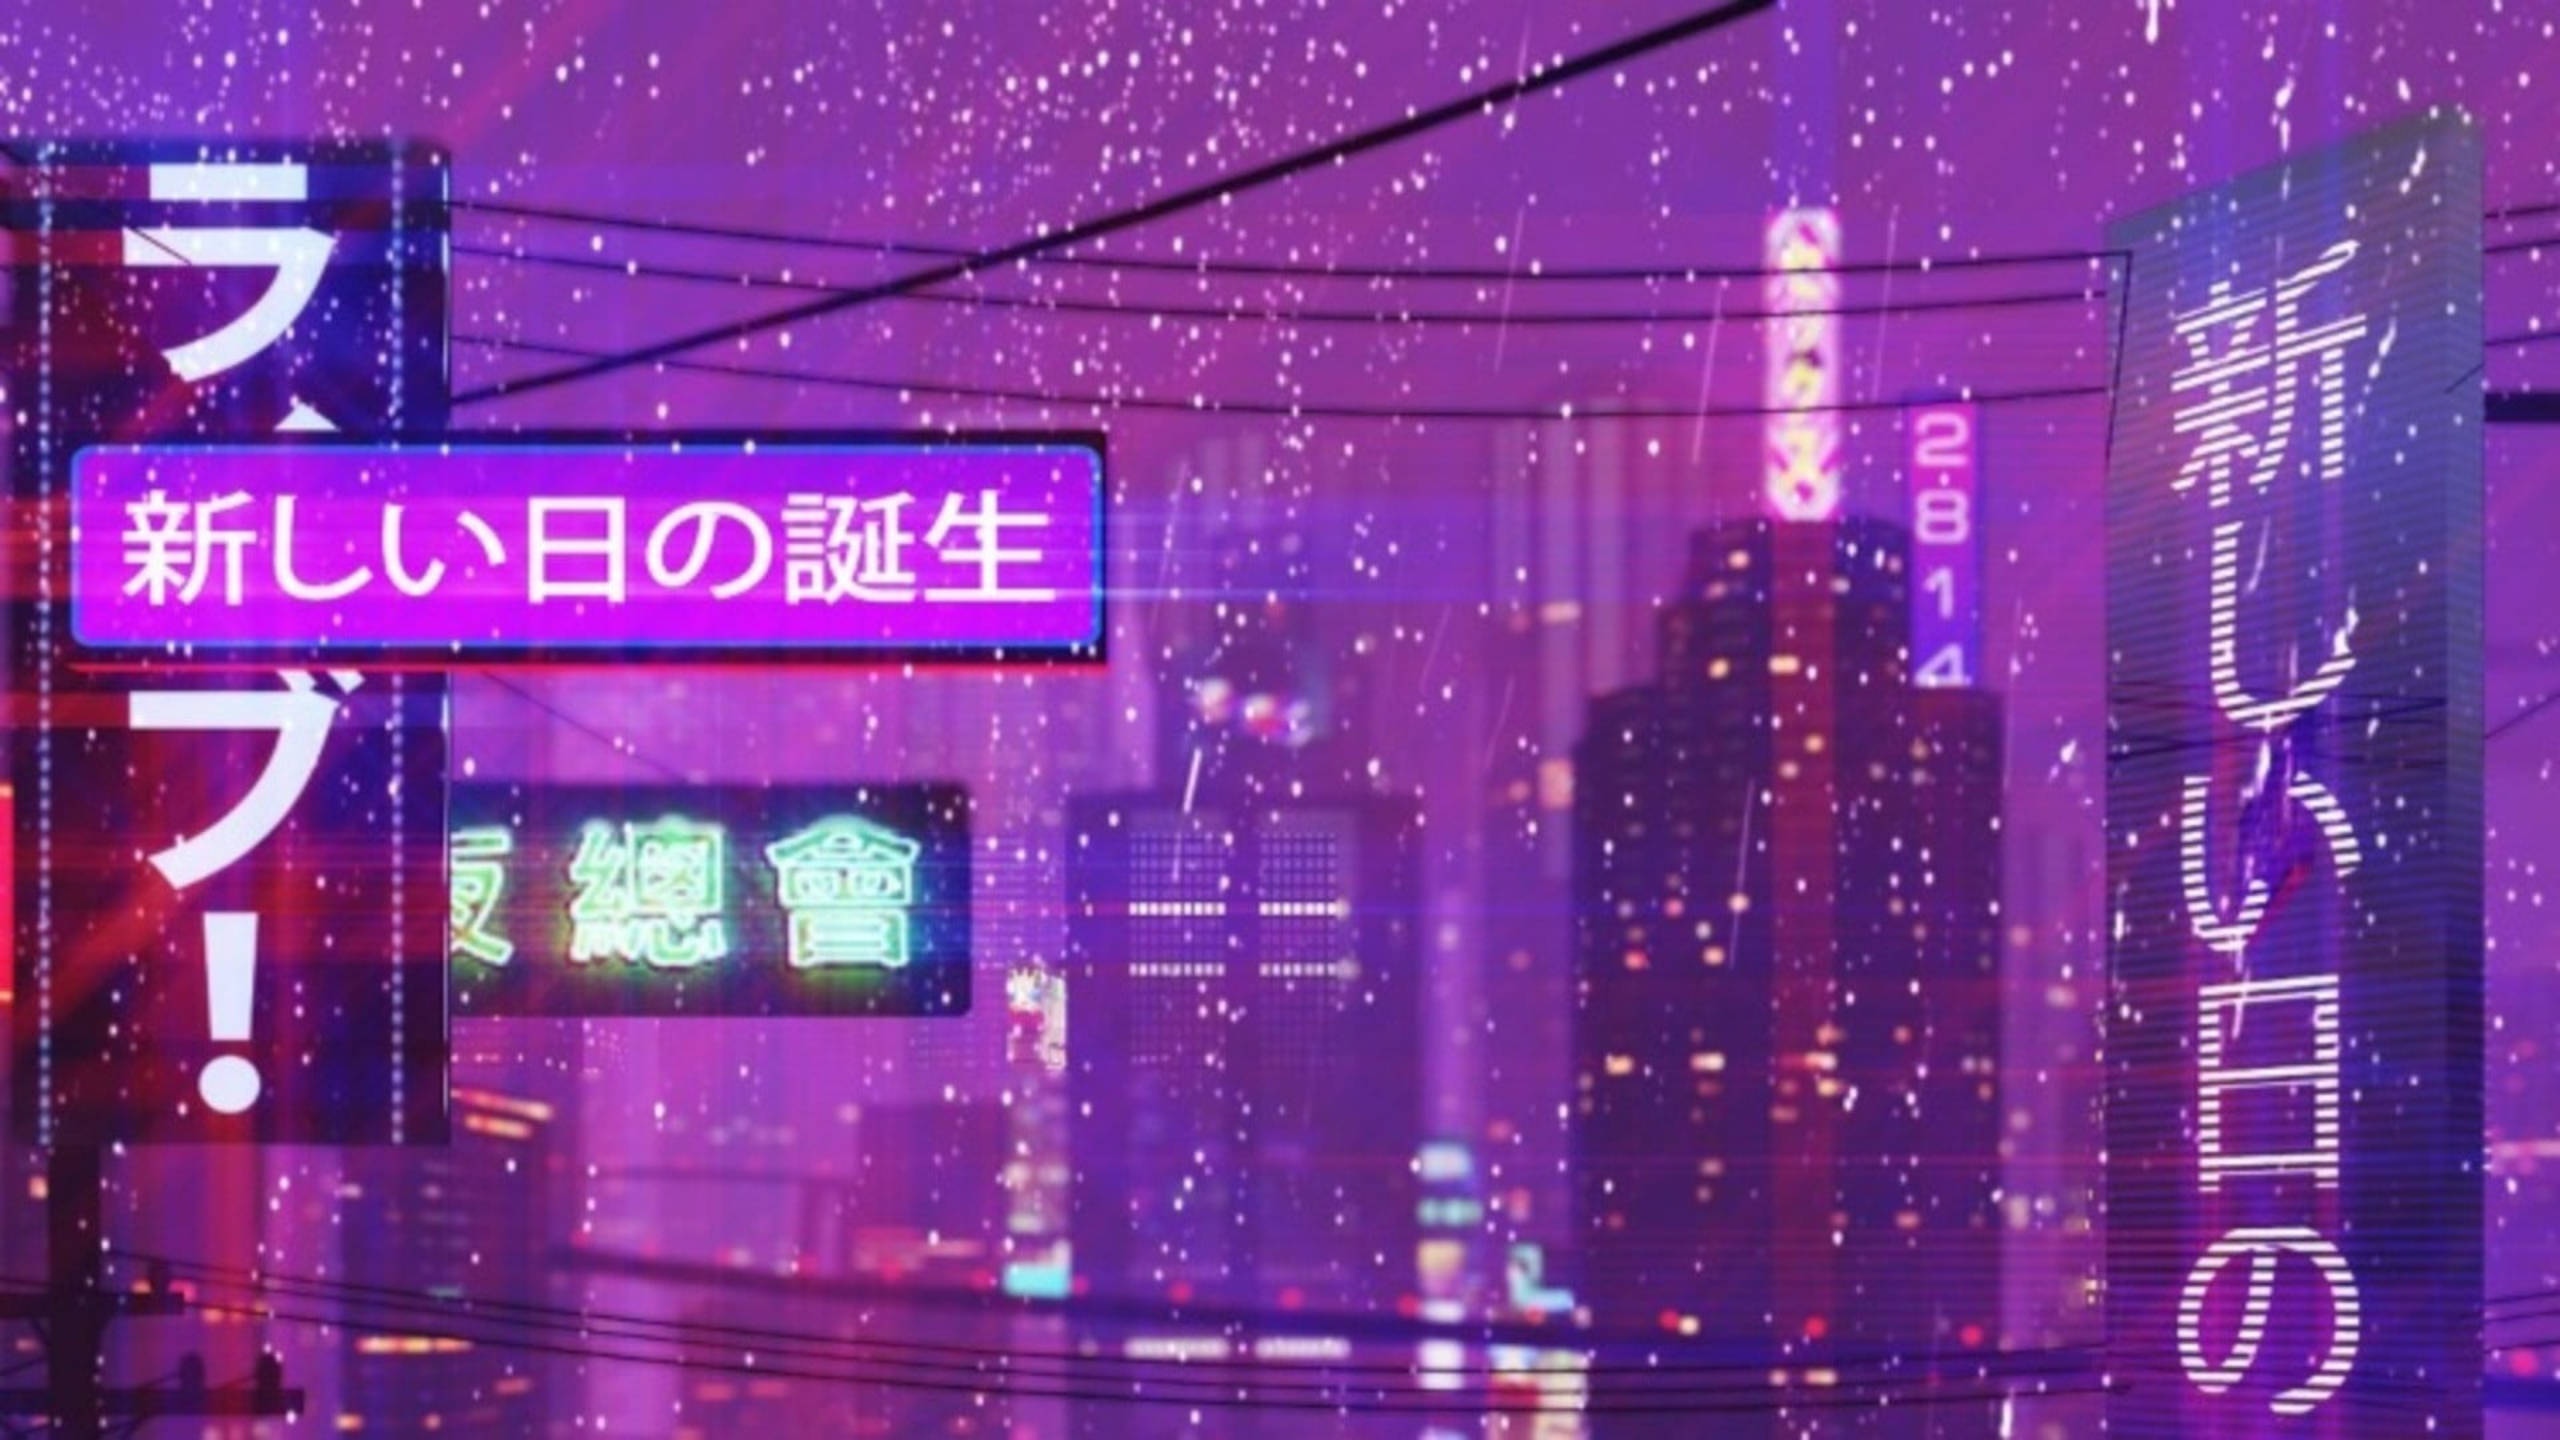 Neonpúrpura Estética Tumblr Para Portátil. Fondo de pantalla